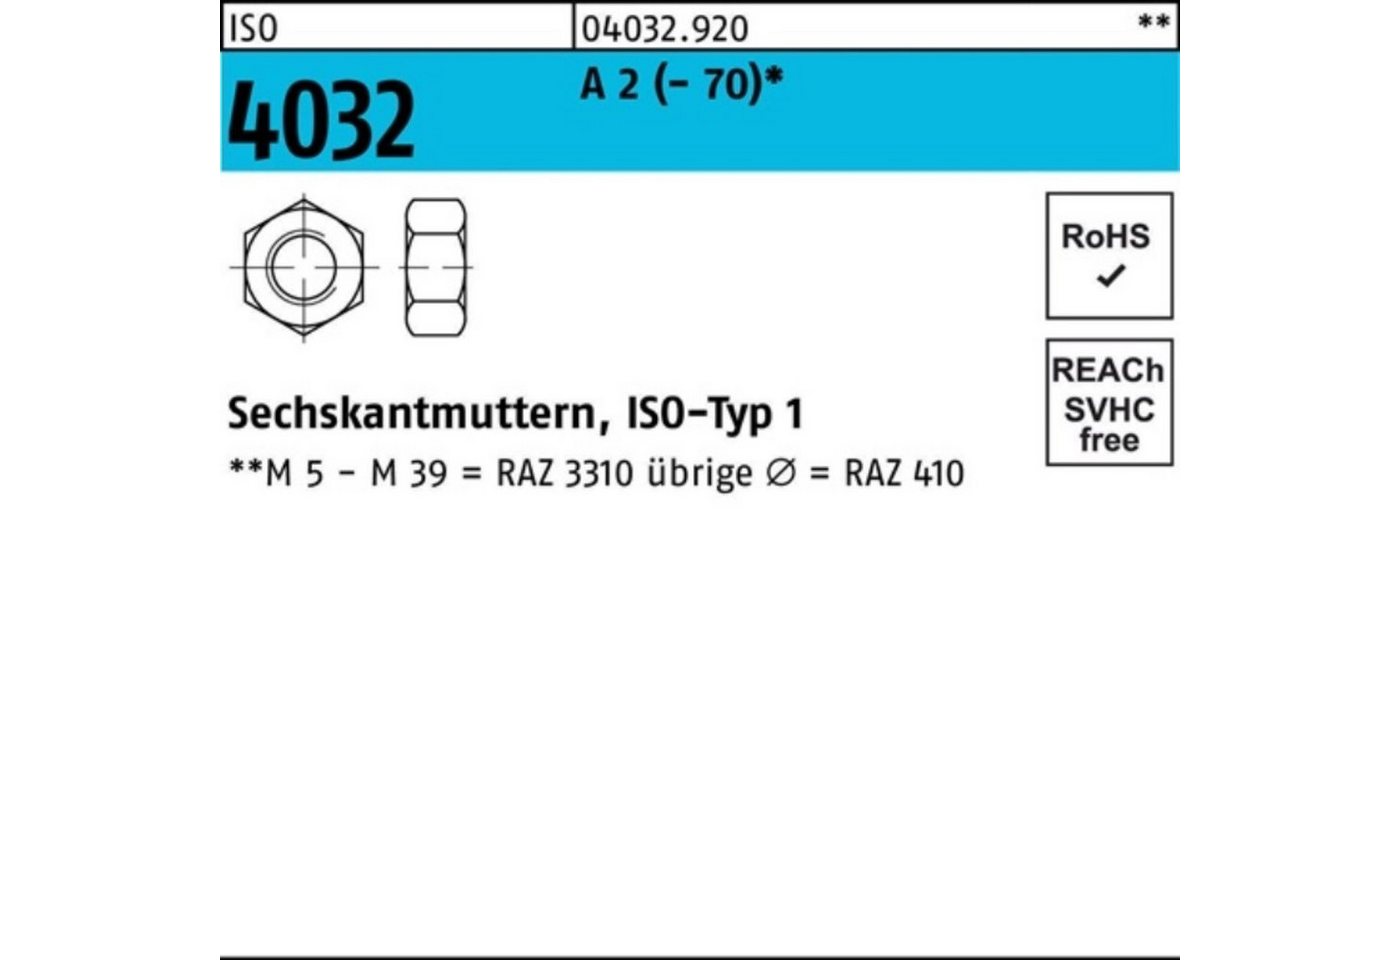 Bufab Muttern 100er Pack Sechskantmutter ISO 4032 M18 A 2 (70) 10 Stück ISO 4032 von Bufab